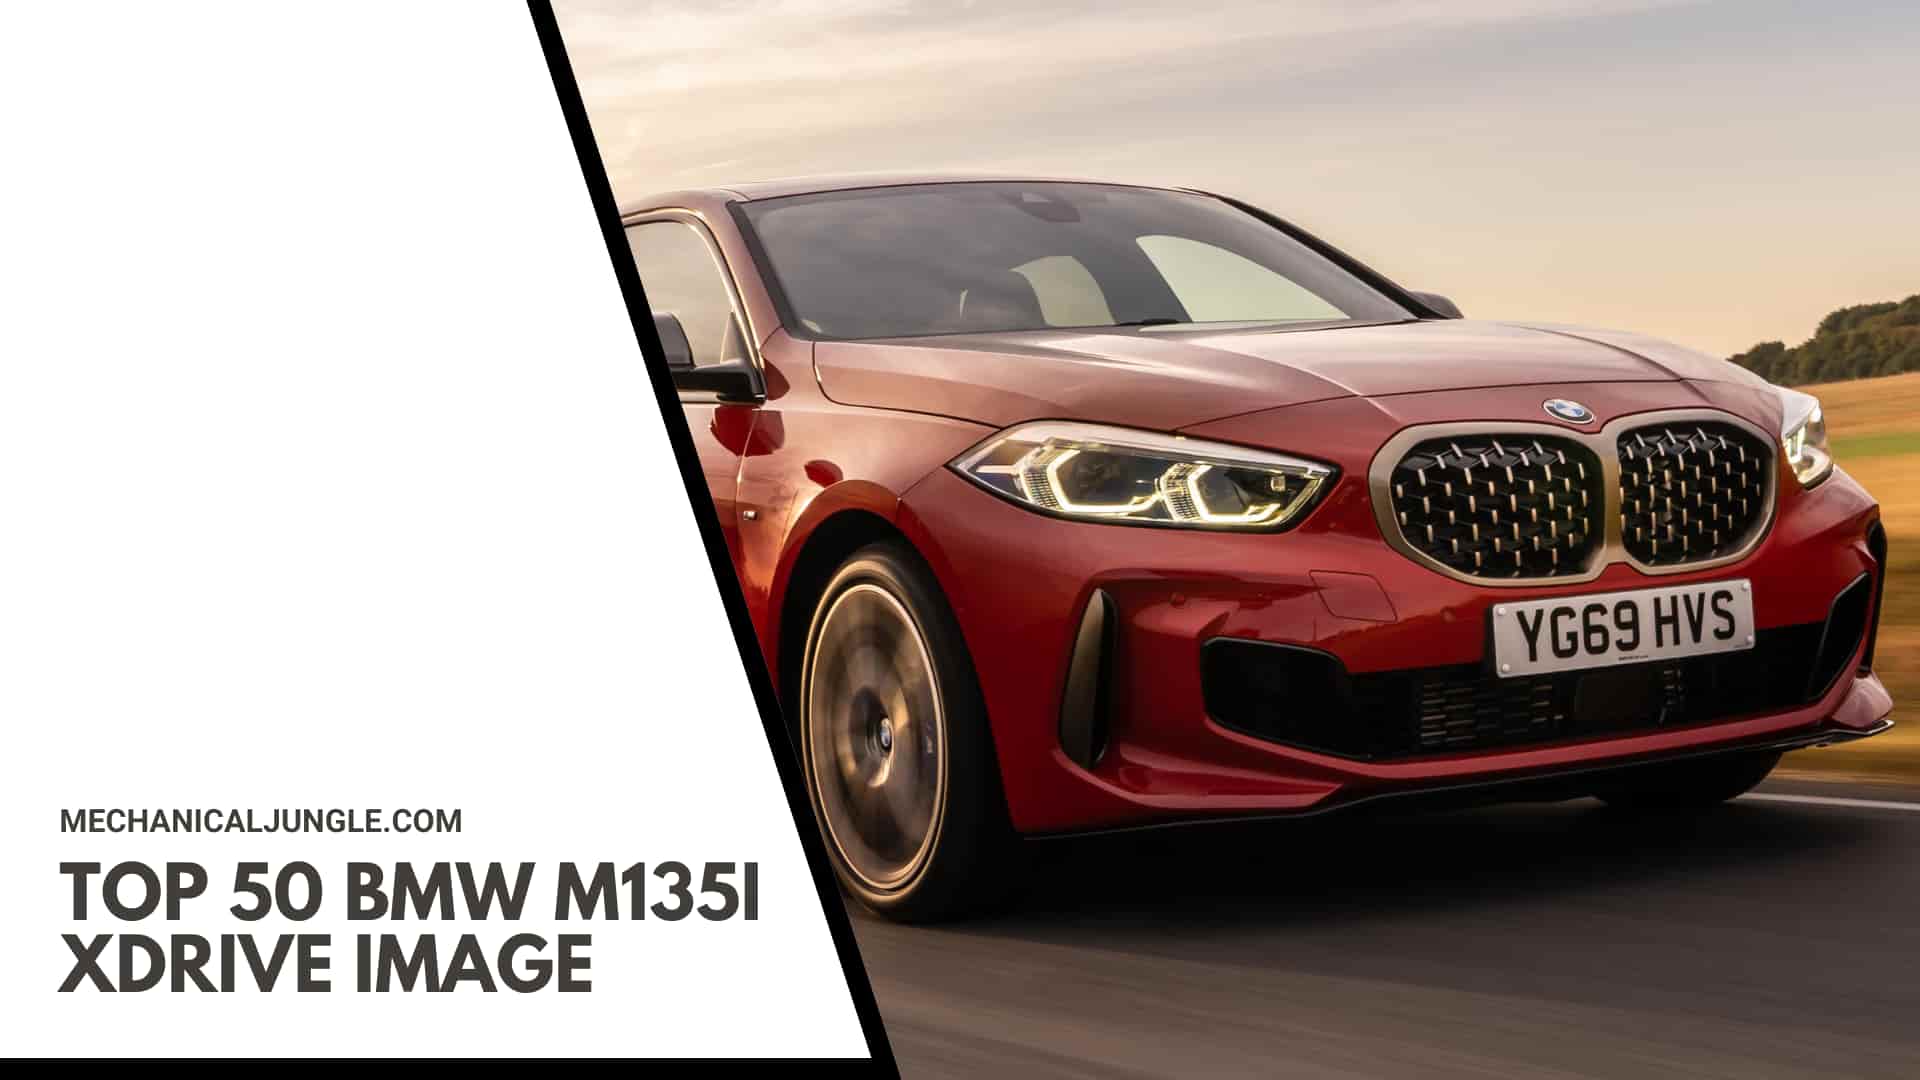 Top 50 BMW M135i xDrive Image